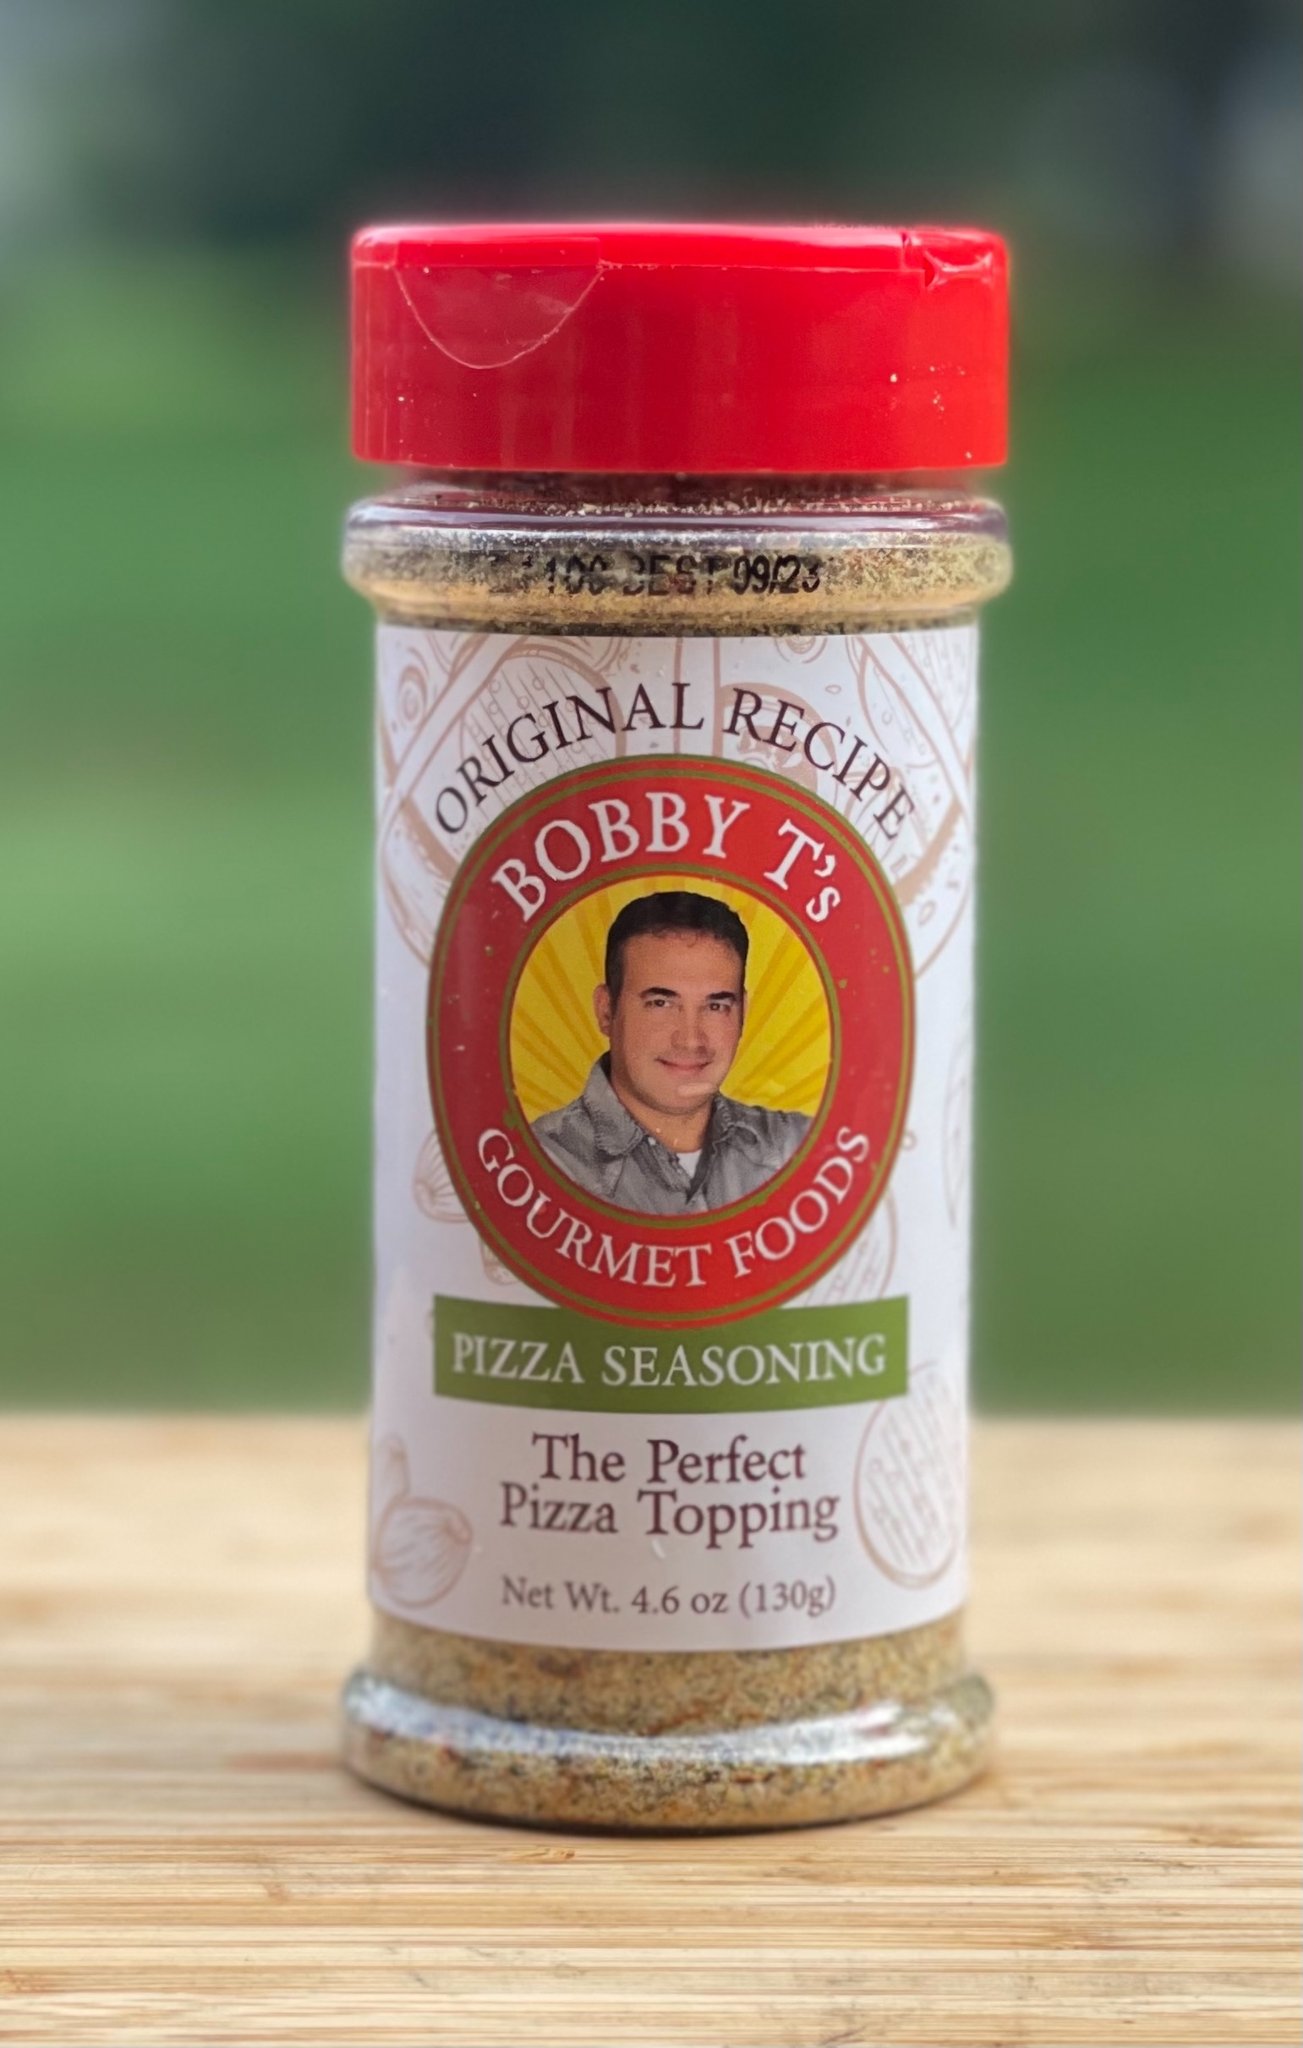 Bobby T's Gourmet Foods Original Recipe Pizza Seasoning